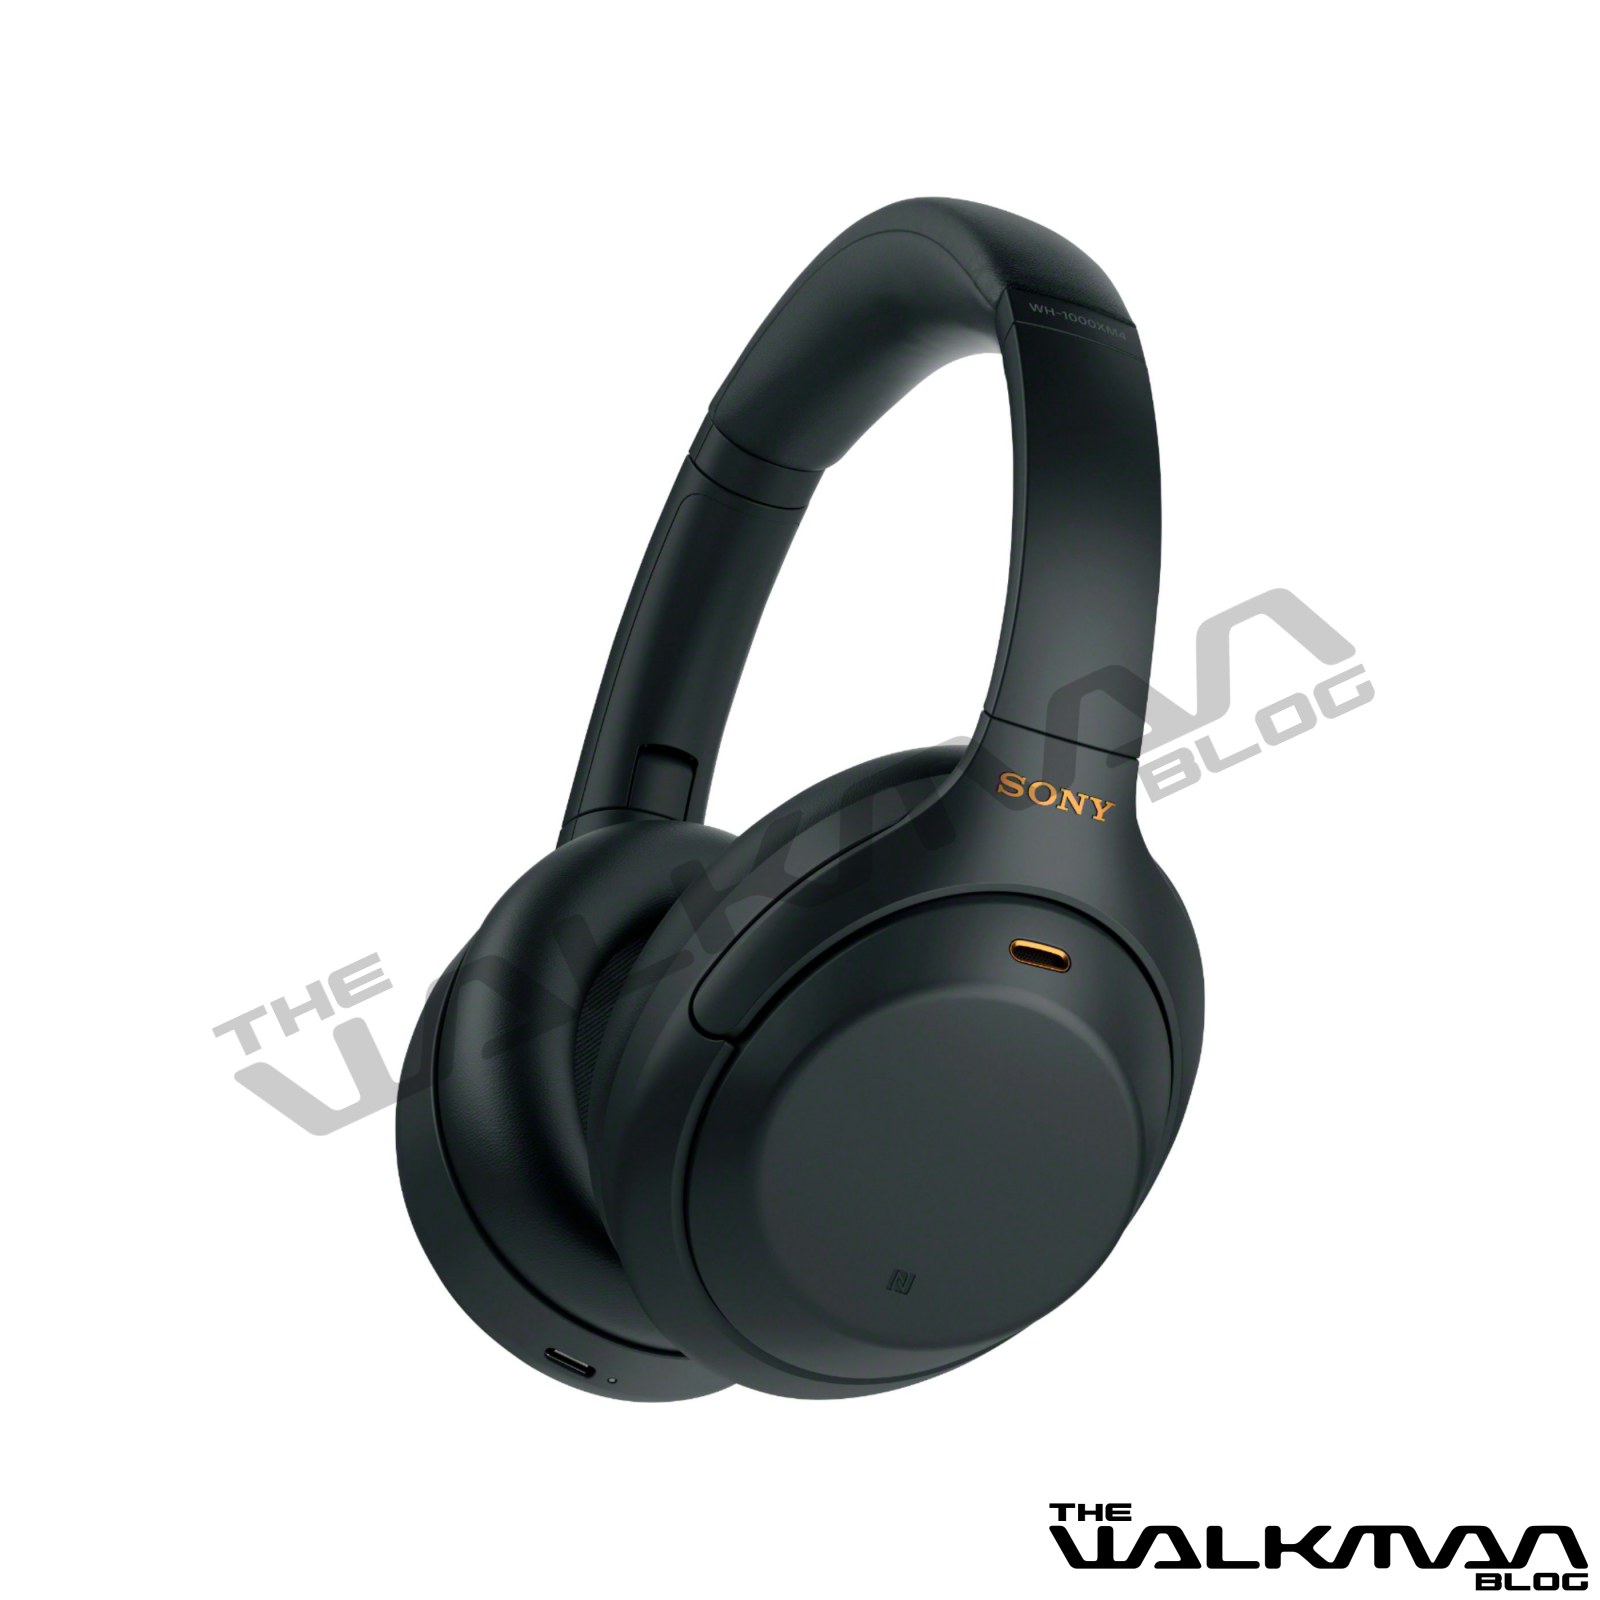 The Walkman Blog: Sony WH-1000XM4 Leaked by Best Buy 